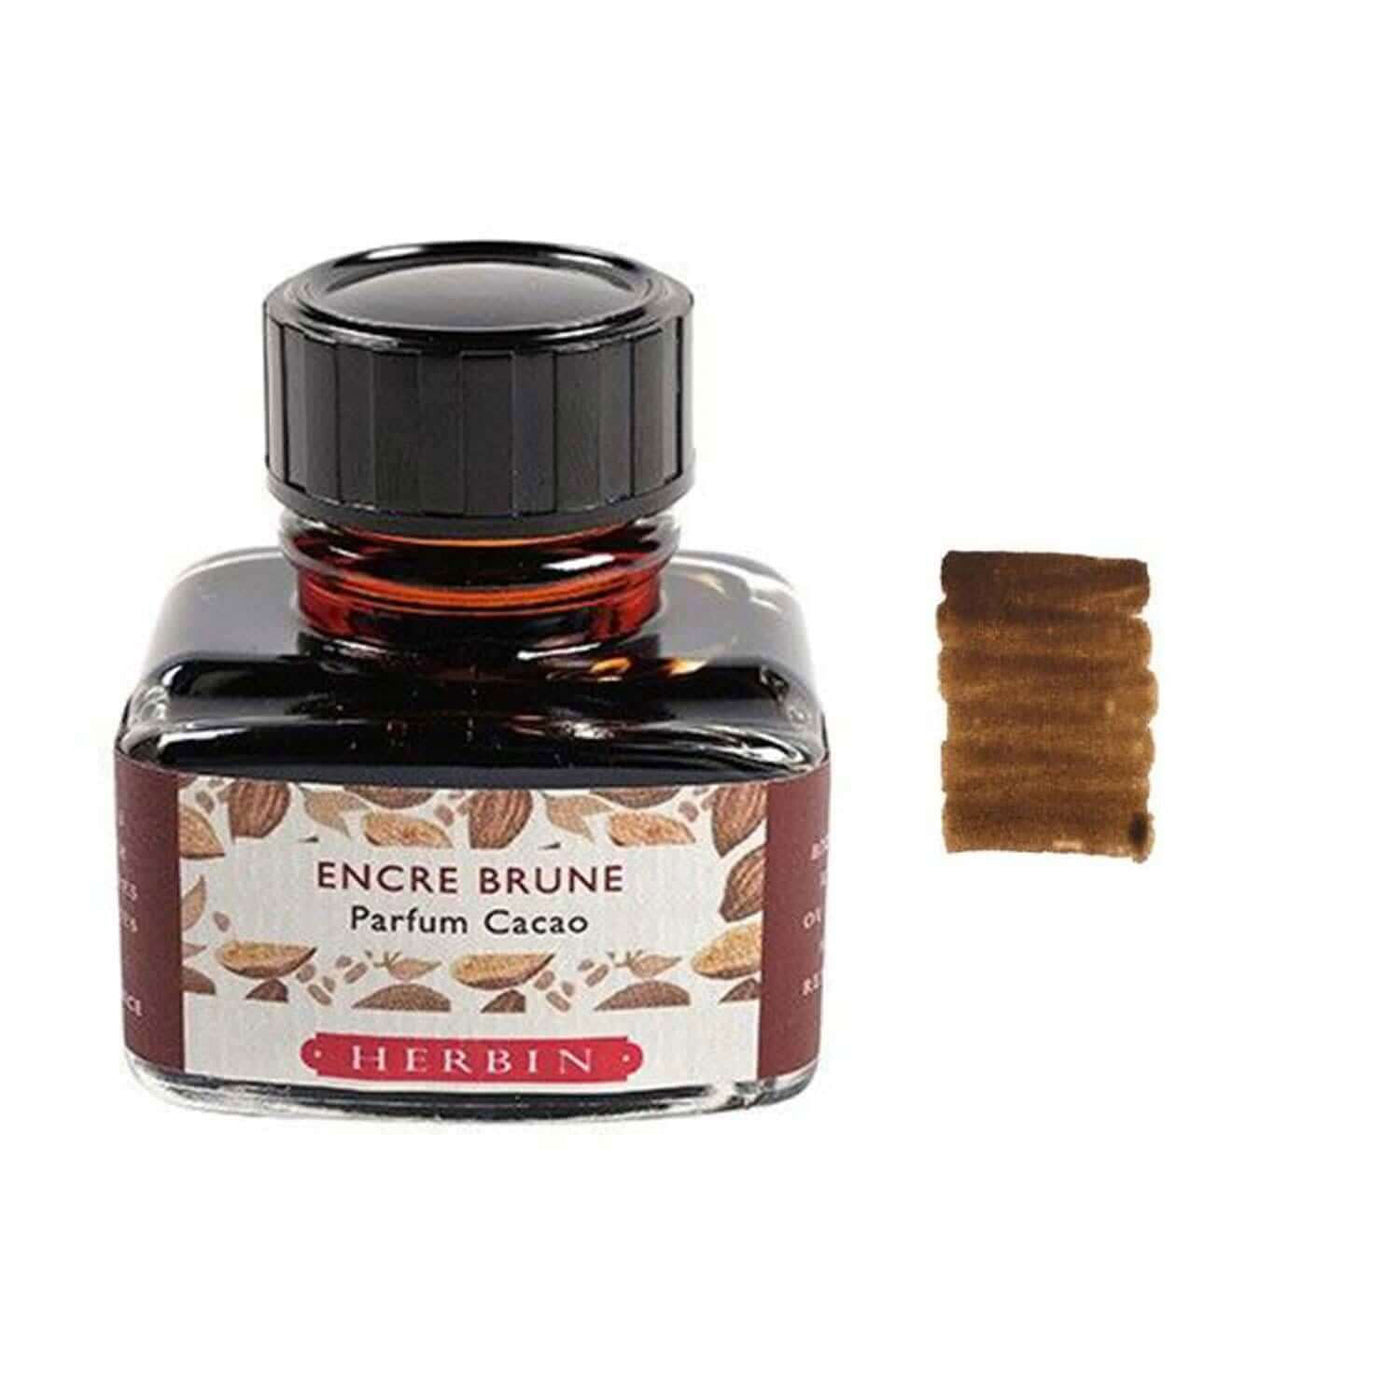 J Herbin Encre Scented Ink Bottle Brune (Brown) - 30ml 2